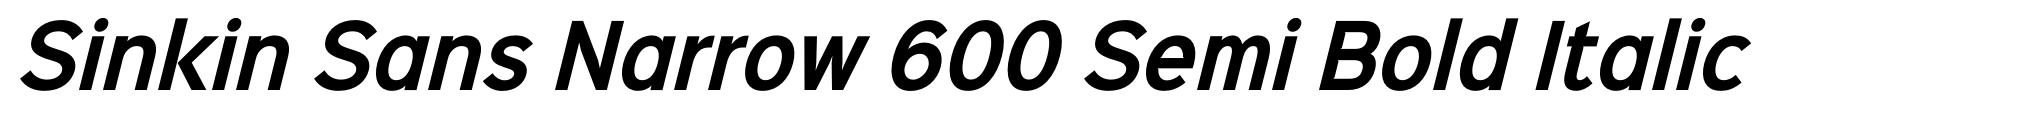 Sinkin Sans Narrow 600 Semi Bold Italic image